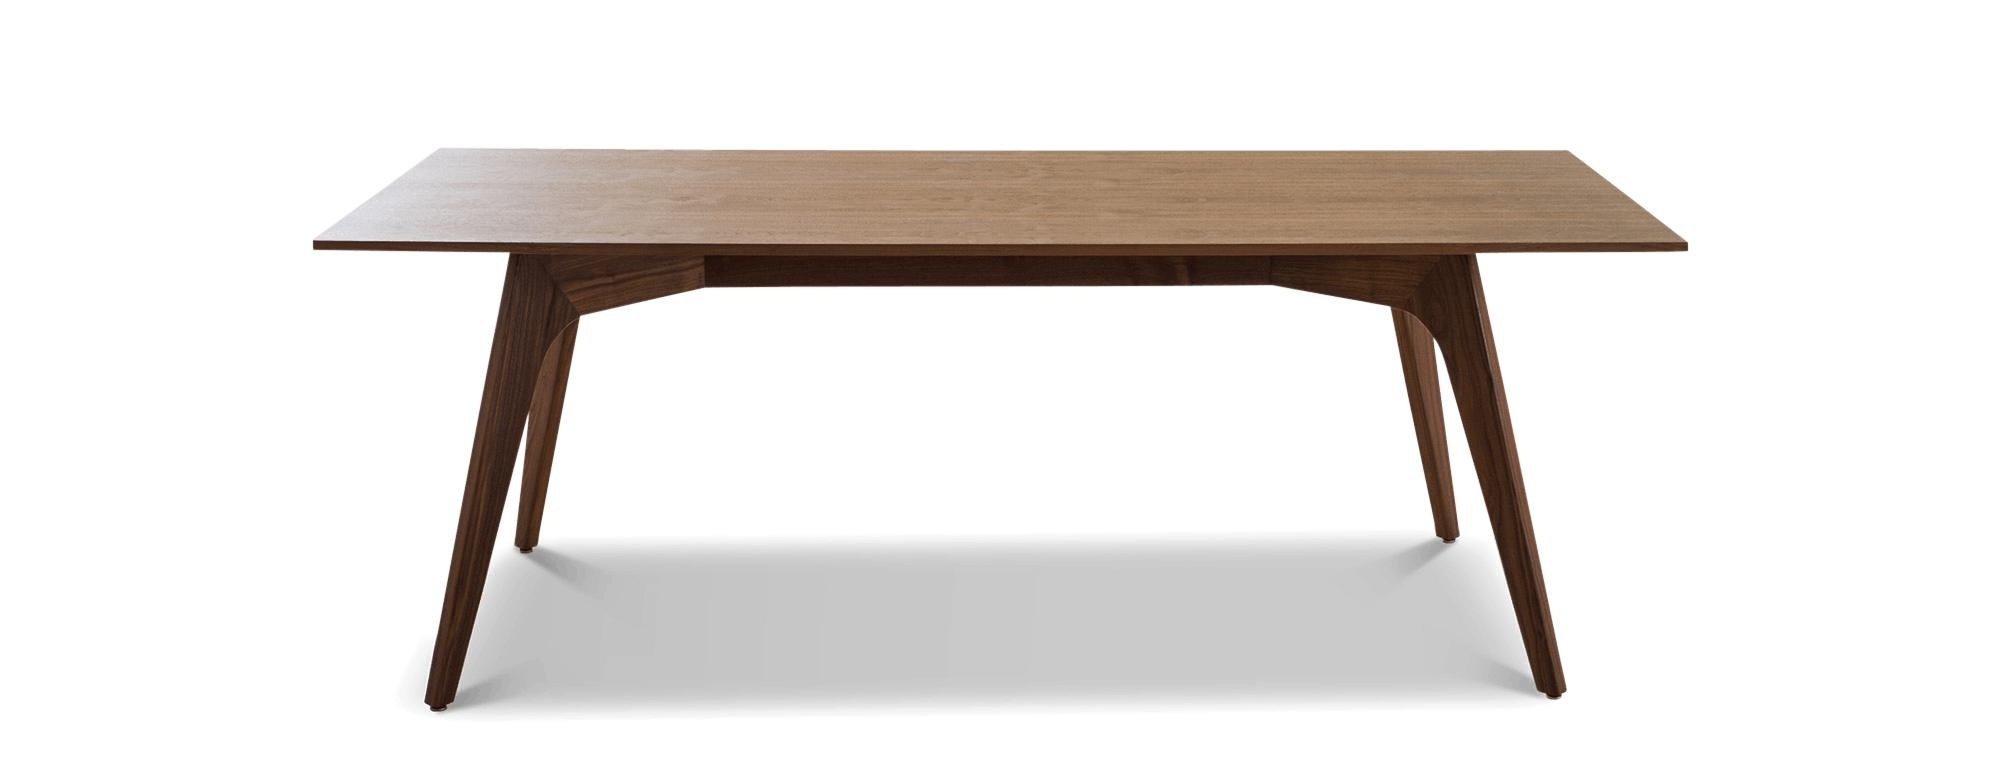 Hesse Mid Century Modern (Wood Top) Dining Table - Walnut - Image 0